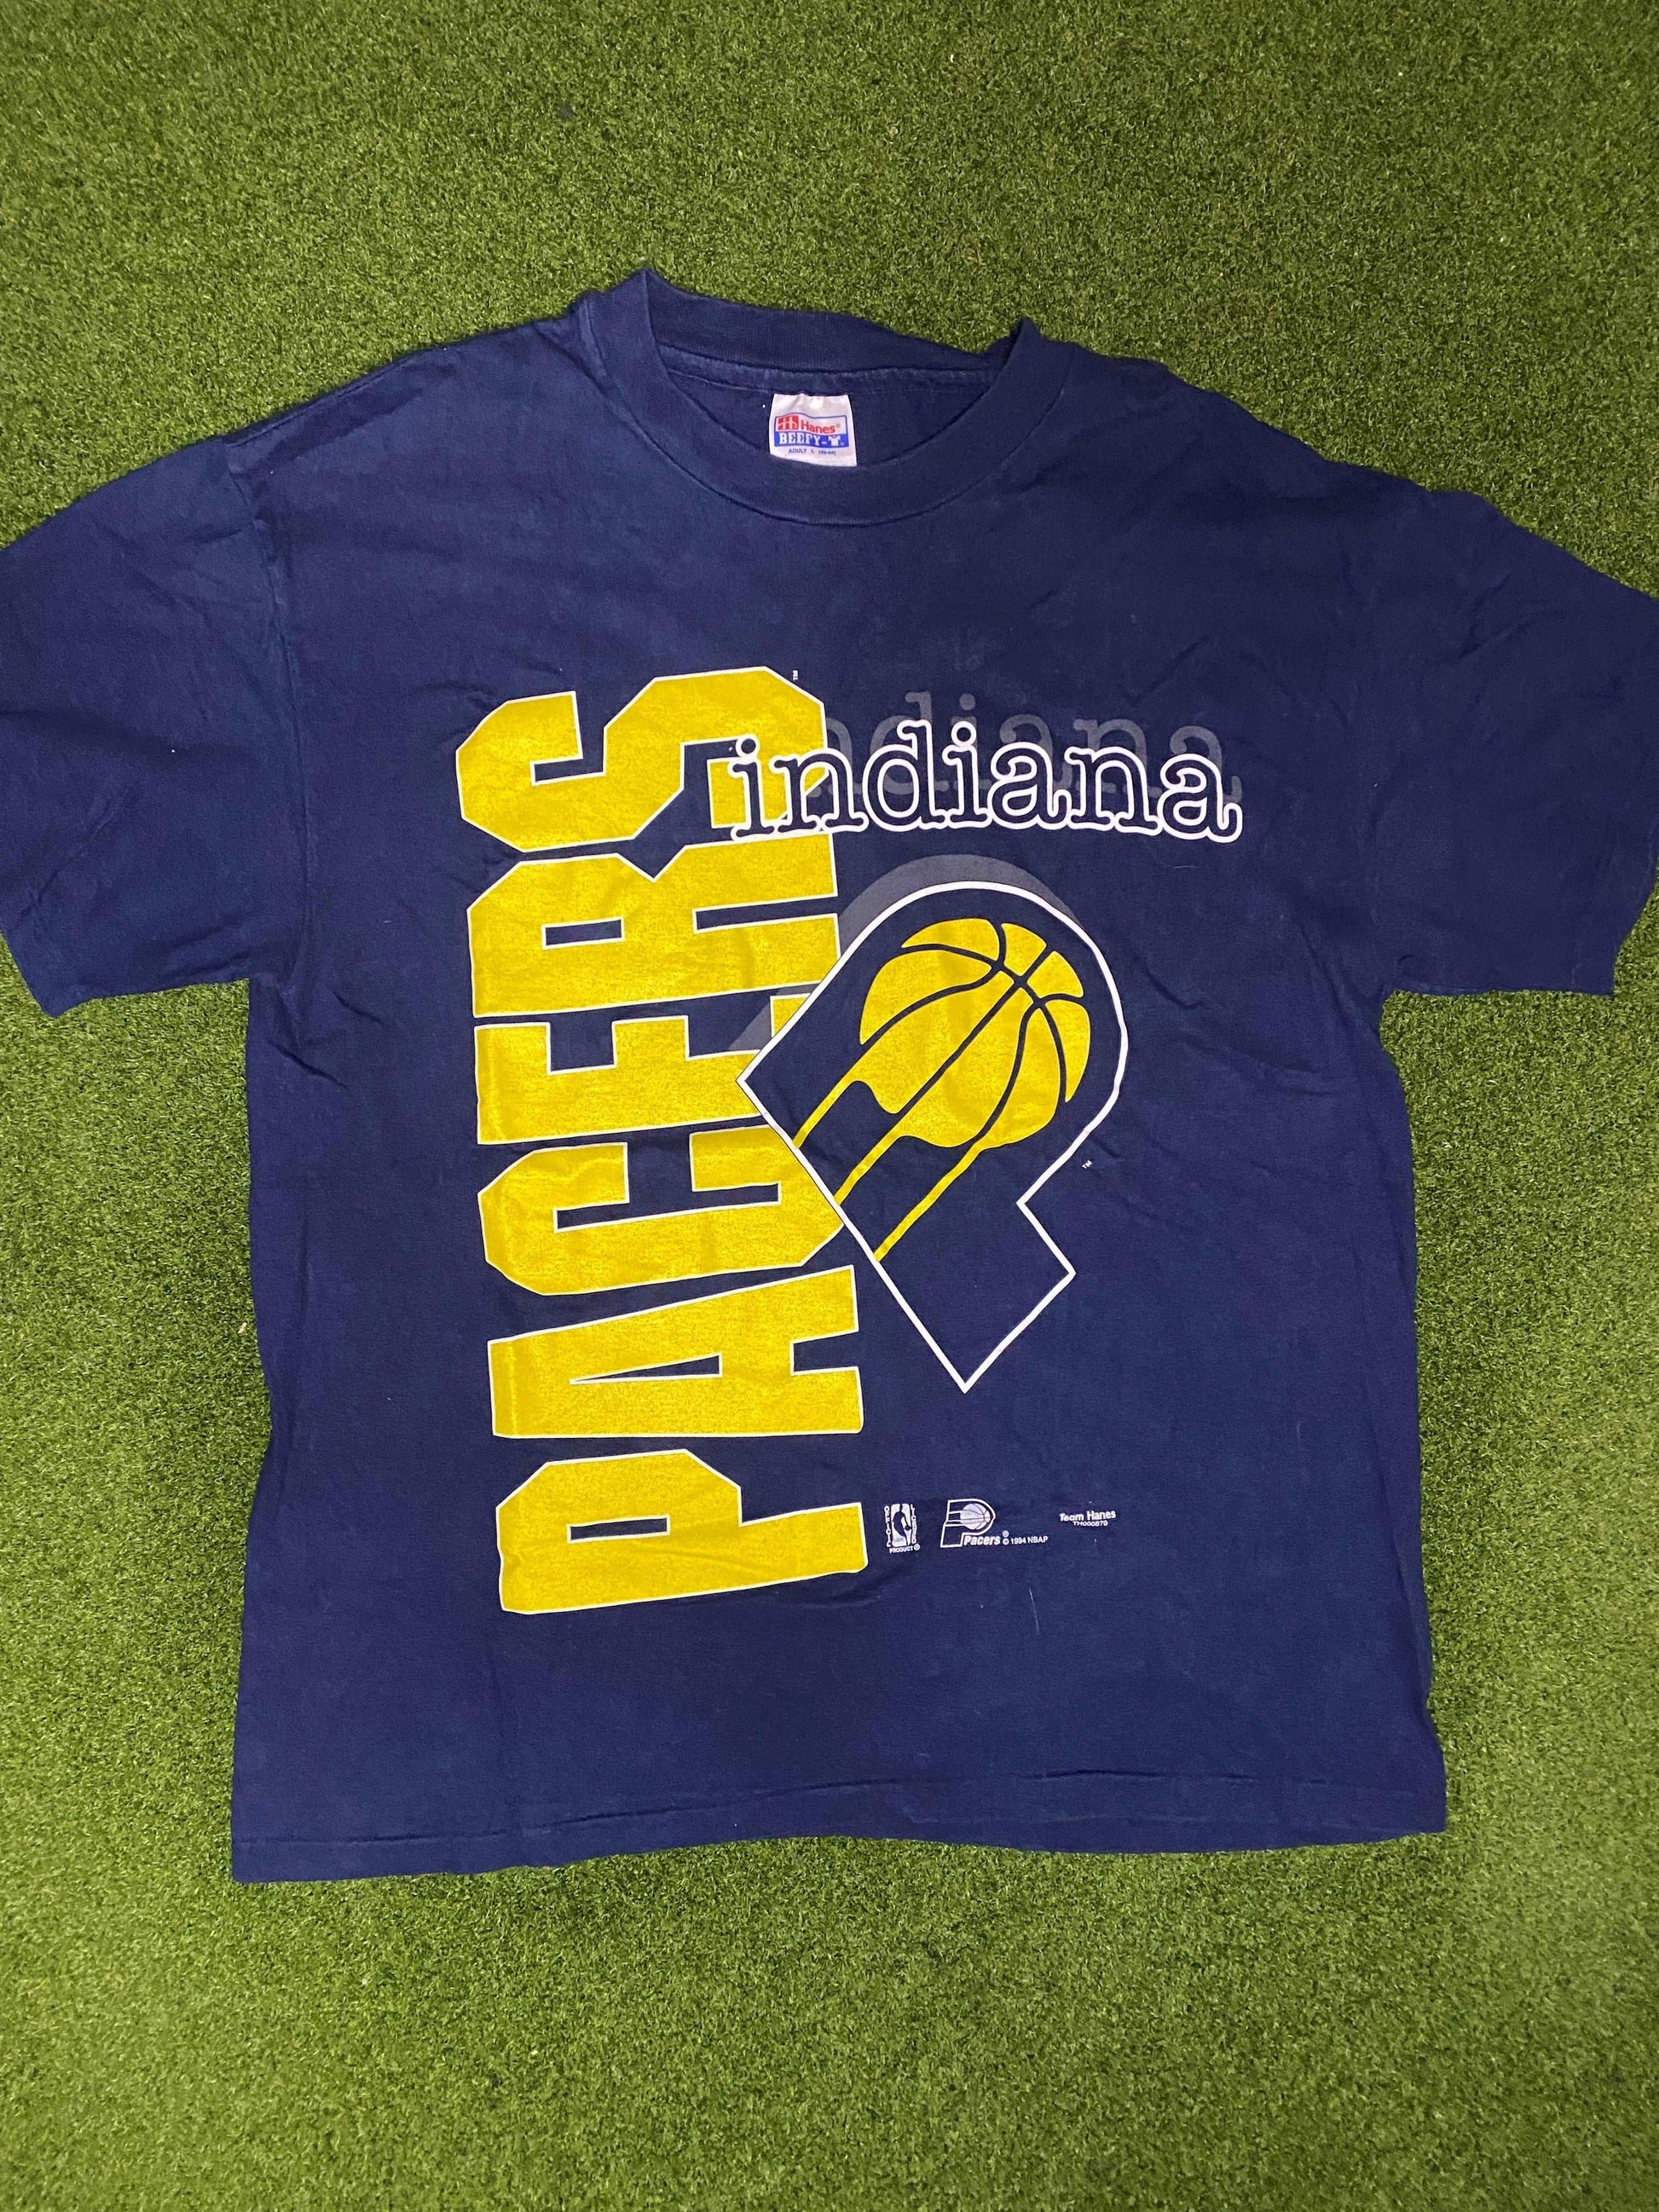 1994 Indiana Pacers - Big Logo - Vintage NBA Tee Shirt (Large)